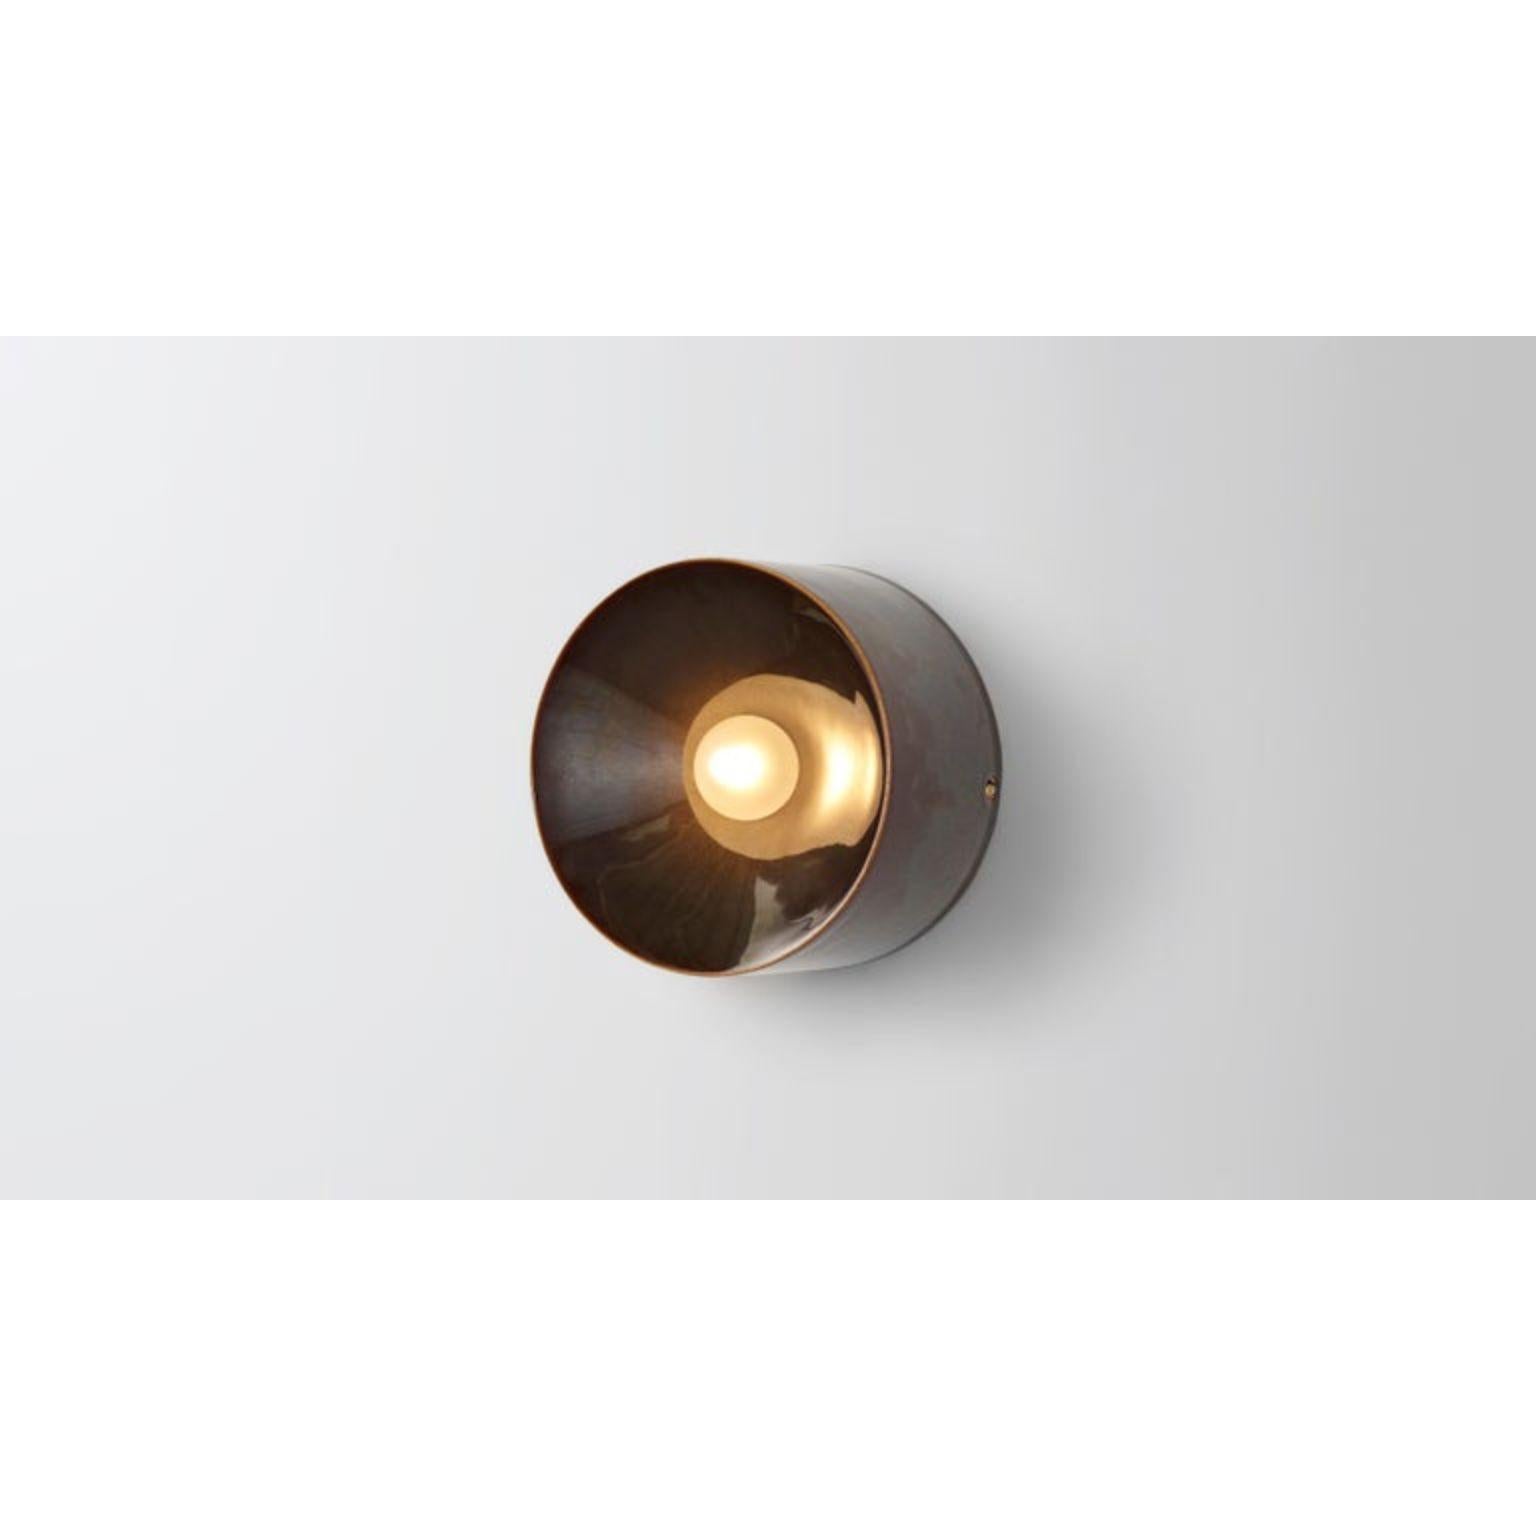 Anton mini in brown ceramic by Volker Haug.
Anton series
Dimensions: W 13, H 13, D 8.3 cm
Materials: Cast ceramic
Glaze: Brown
Lamp: G9 LED (240V / 120V US). 12V option available
Glass bulb: 4.5 cm Ø, Frosted
Weight: 1kg

Anton Mini (Ø13